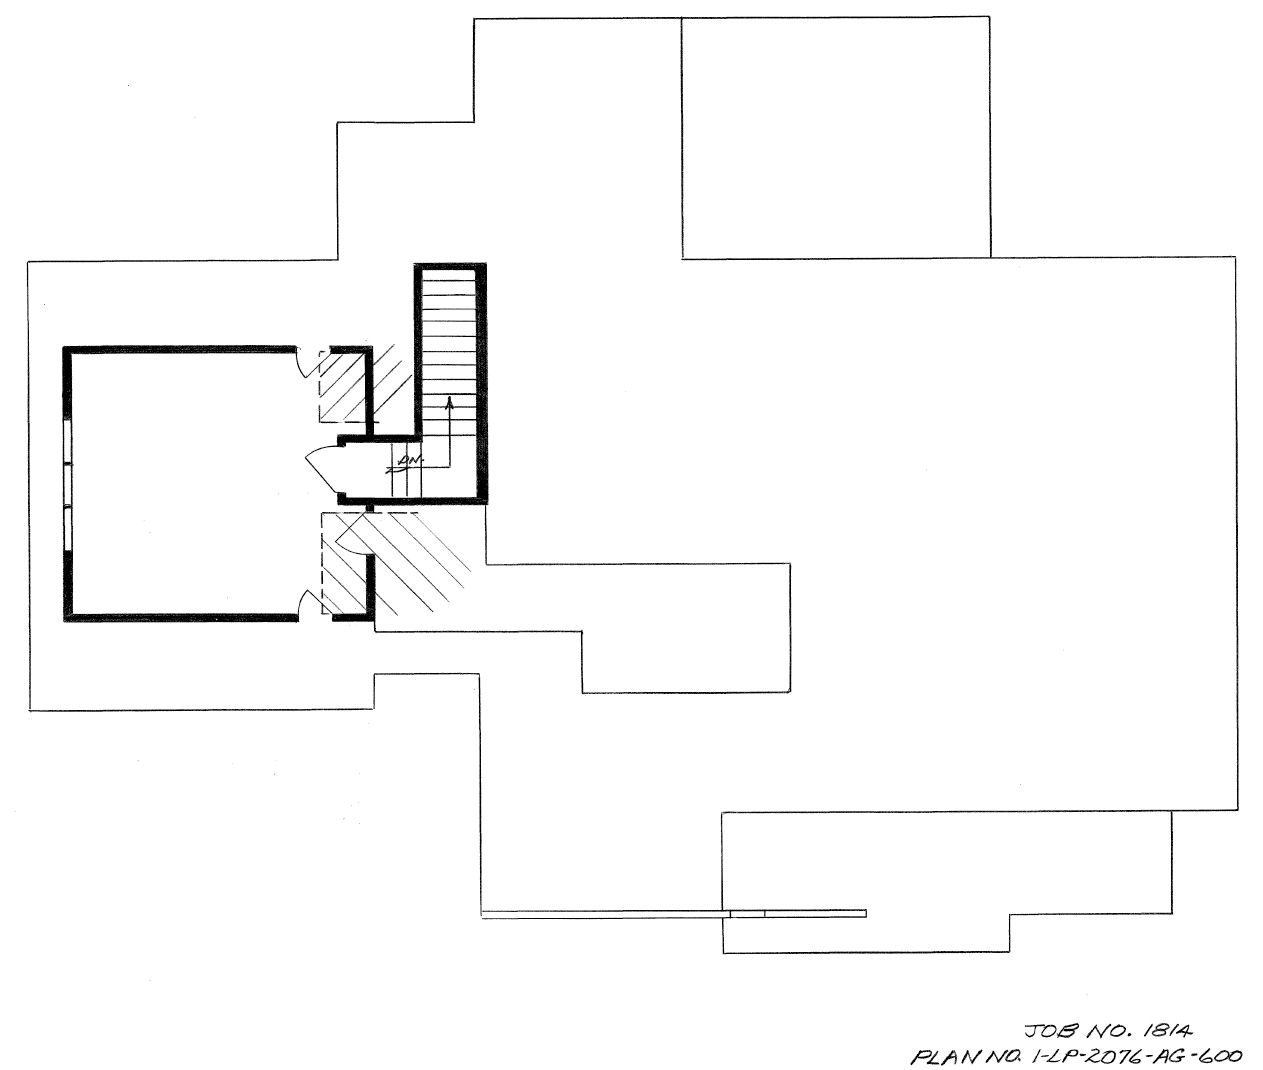 floor-plan-1814-2.jpg